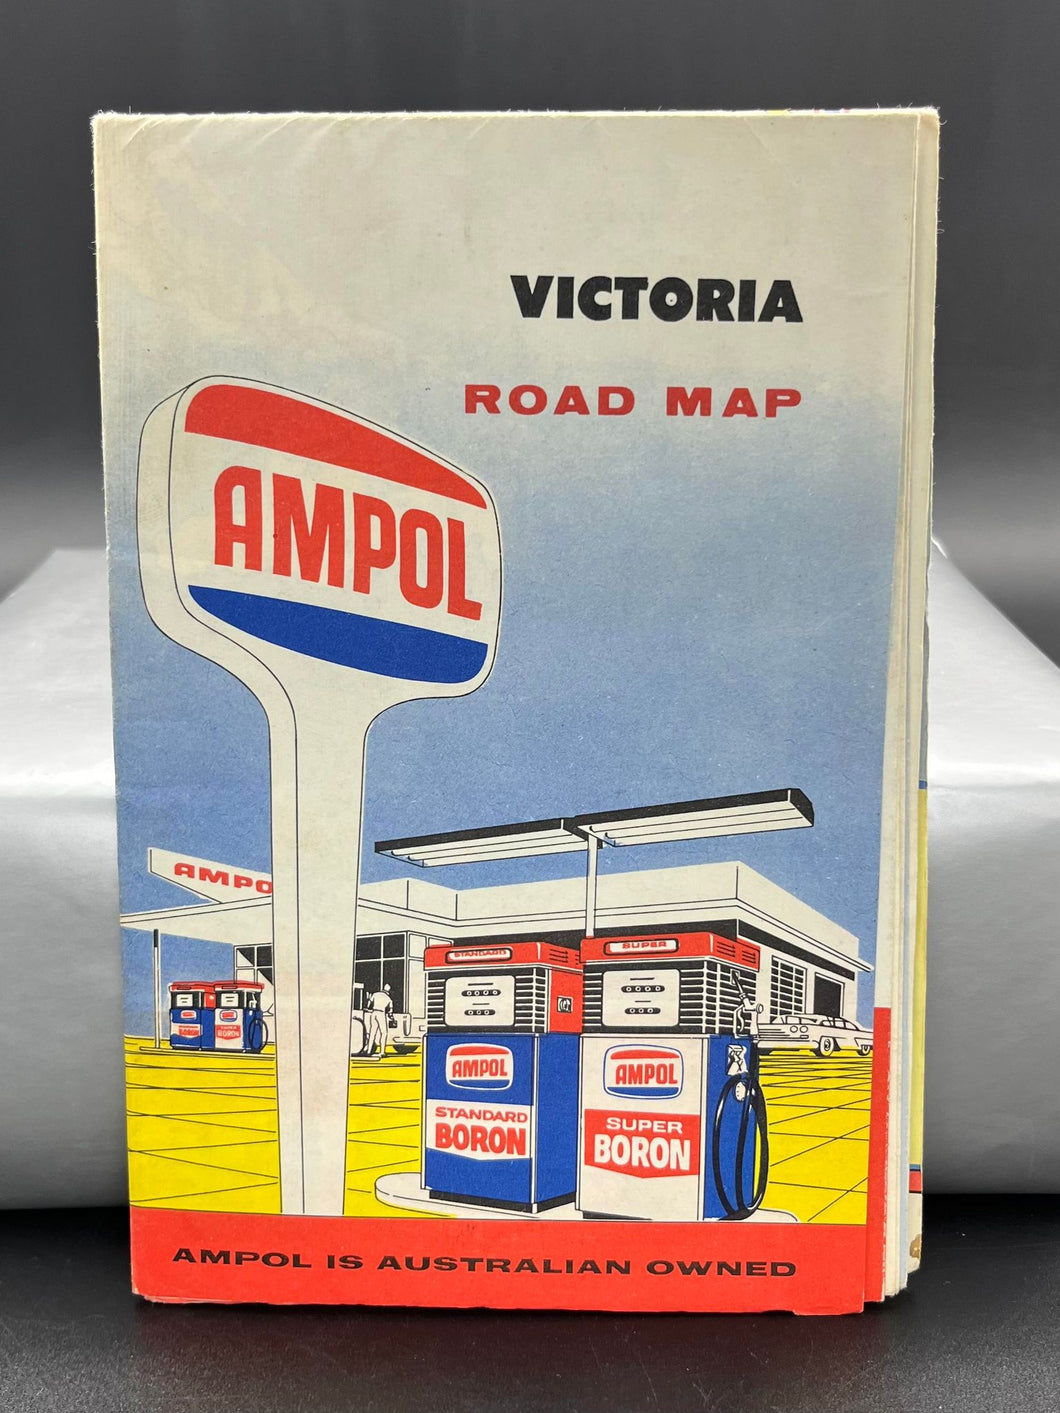 Ampol Road Map - Victoria